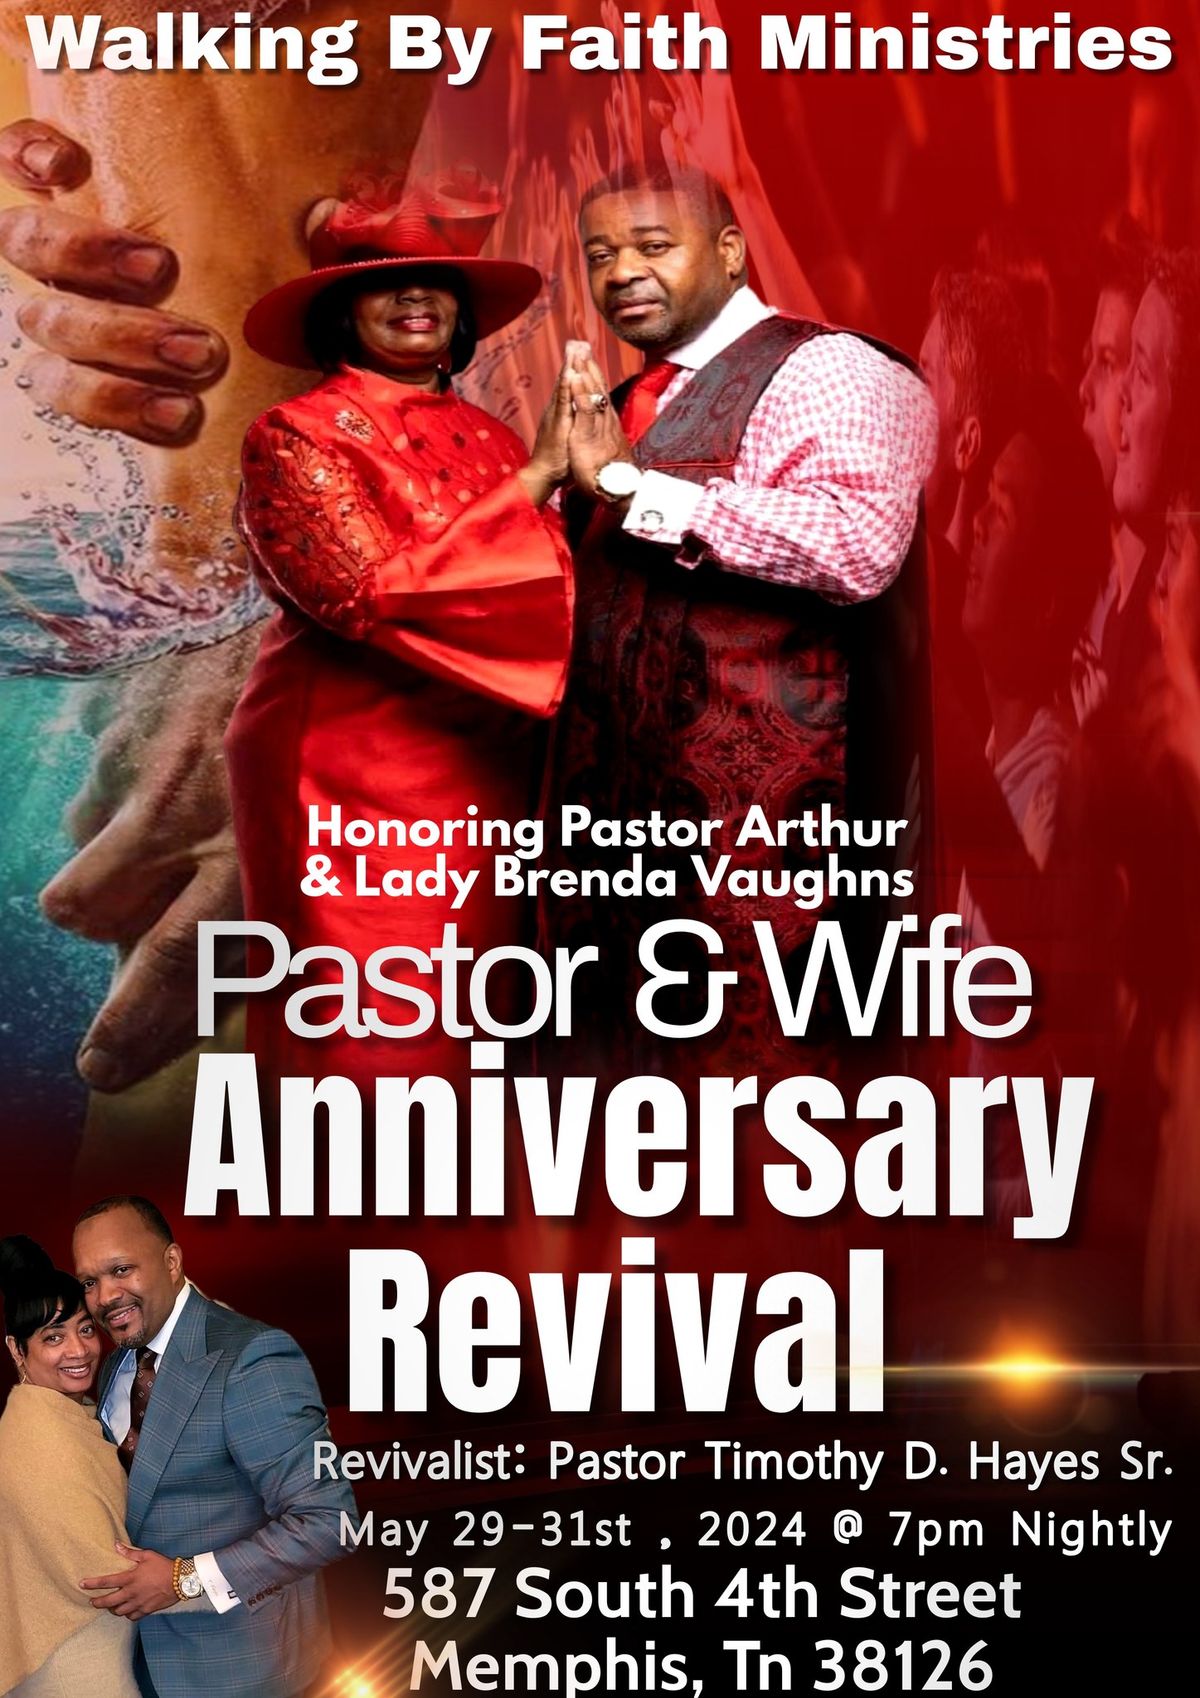 Pastor Arthur & Lady Brenda Vaughns Anniversary Revival\u203c\ufe0f\u203c\ufe0f